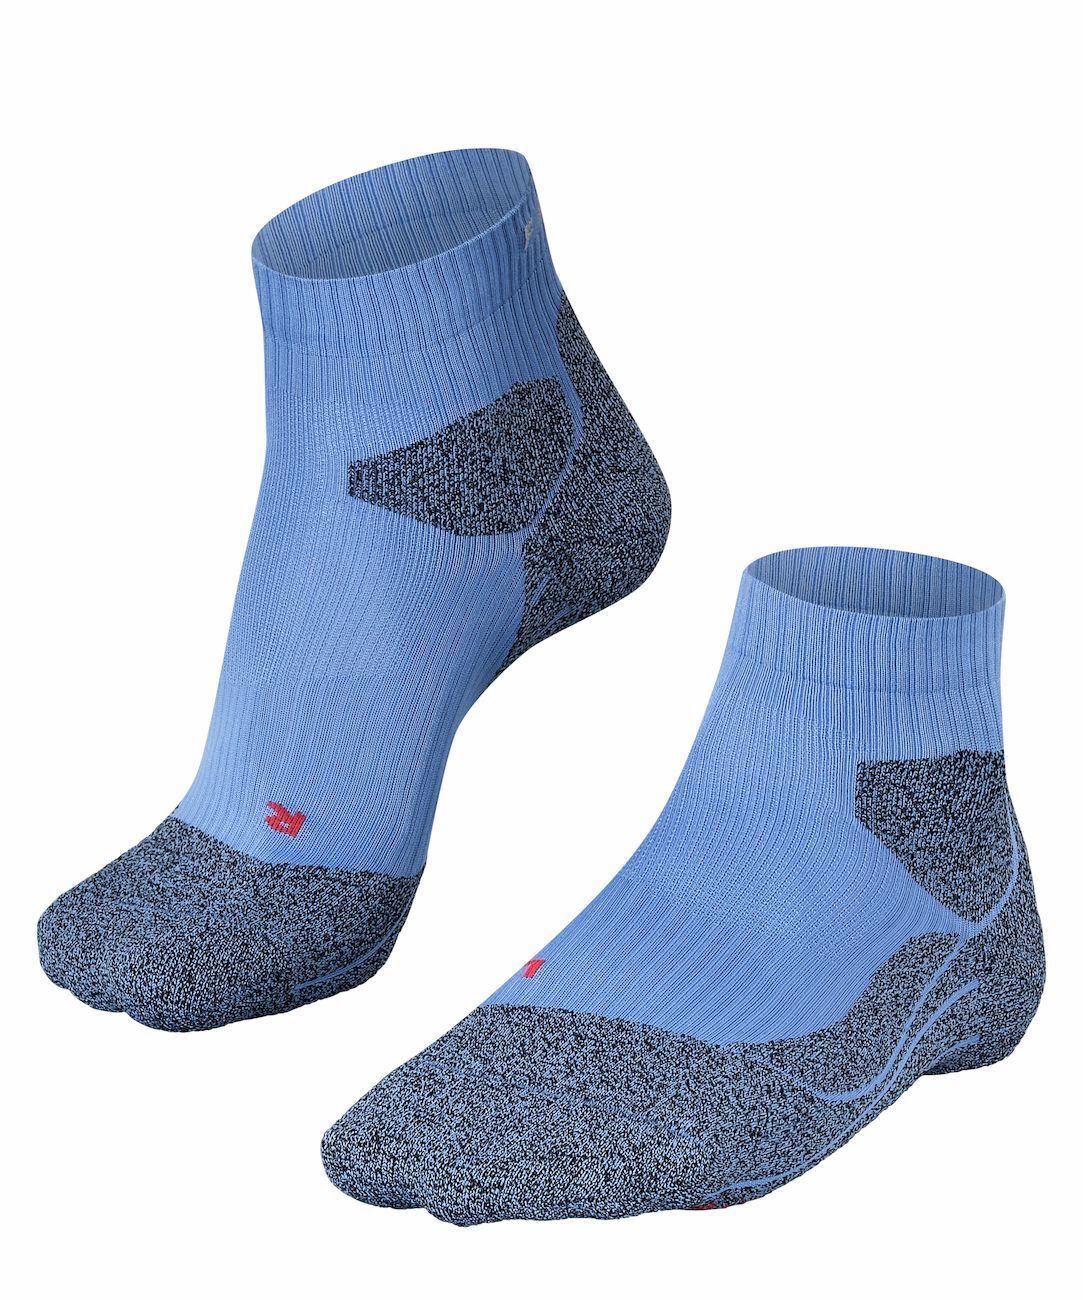 Falke RU Trail - Running socks - Women's